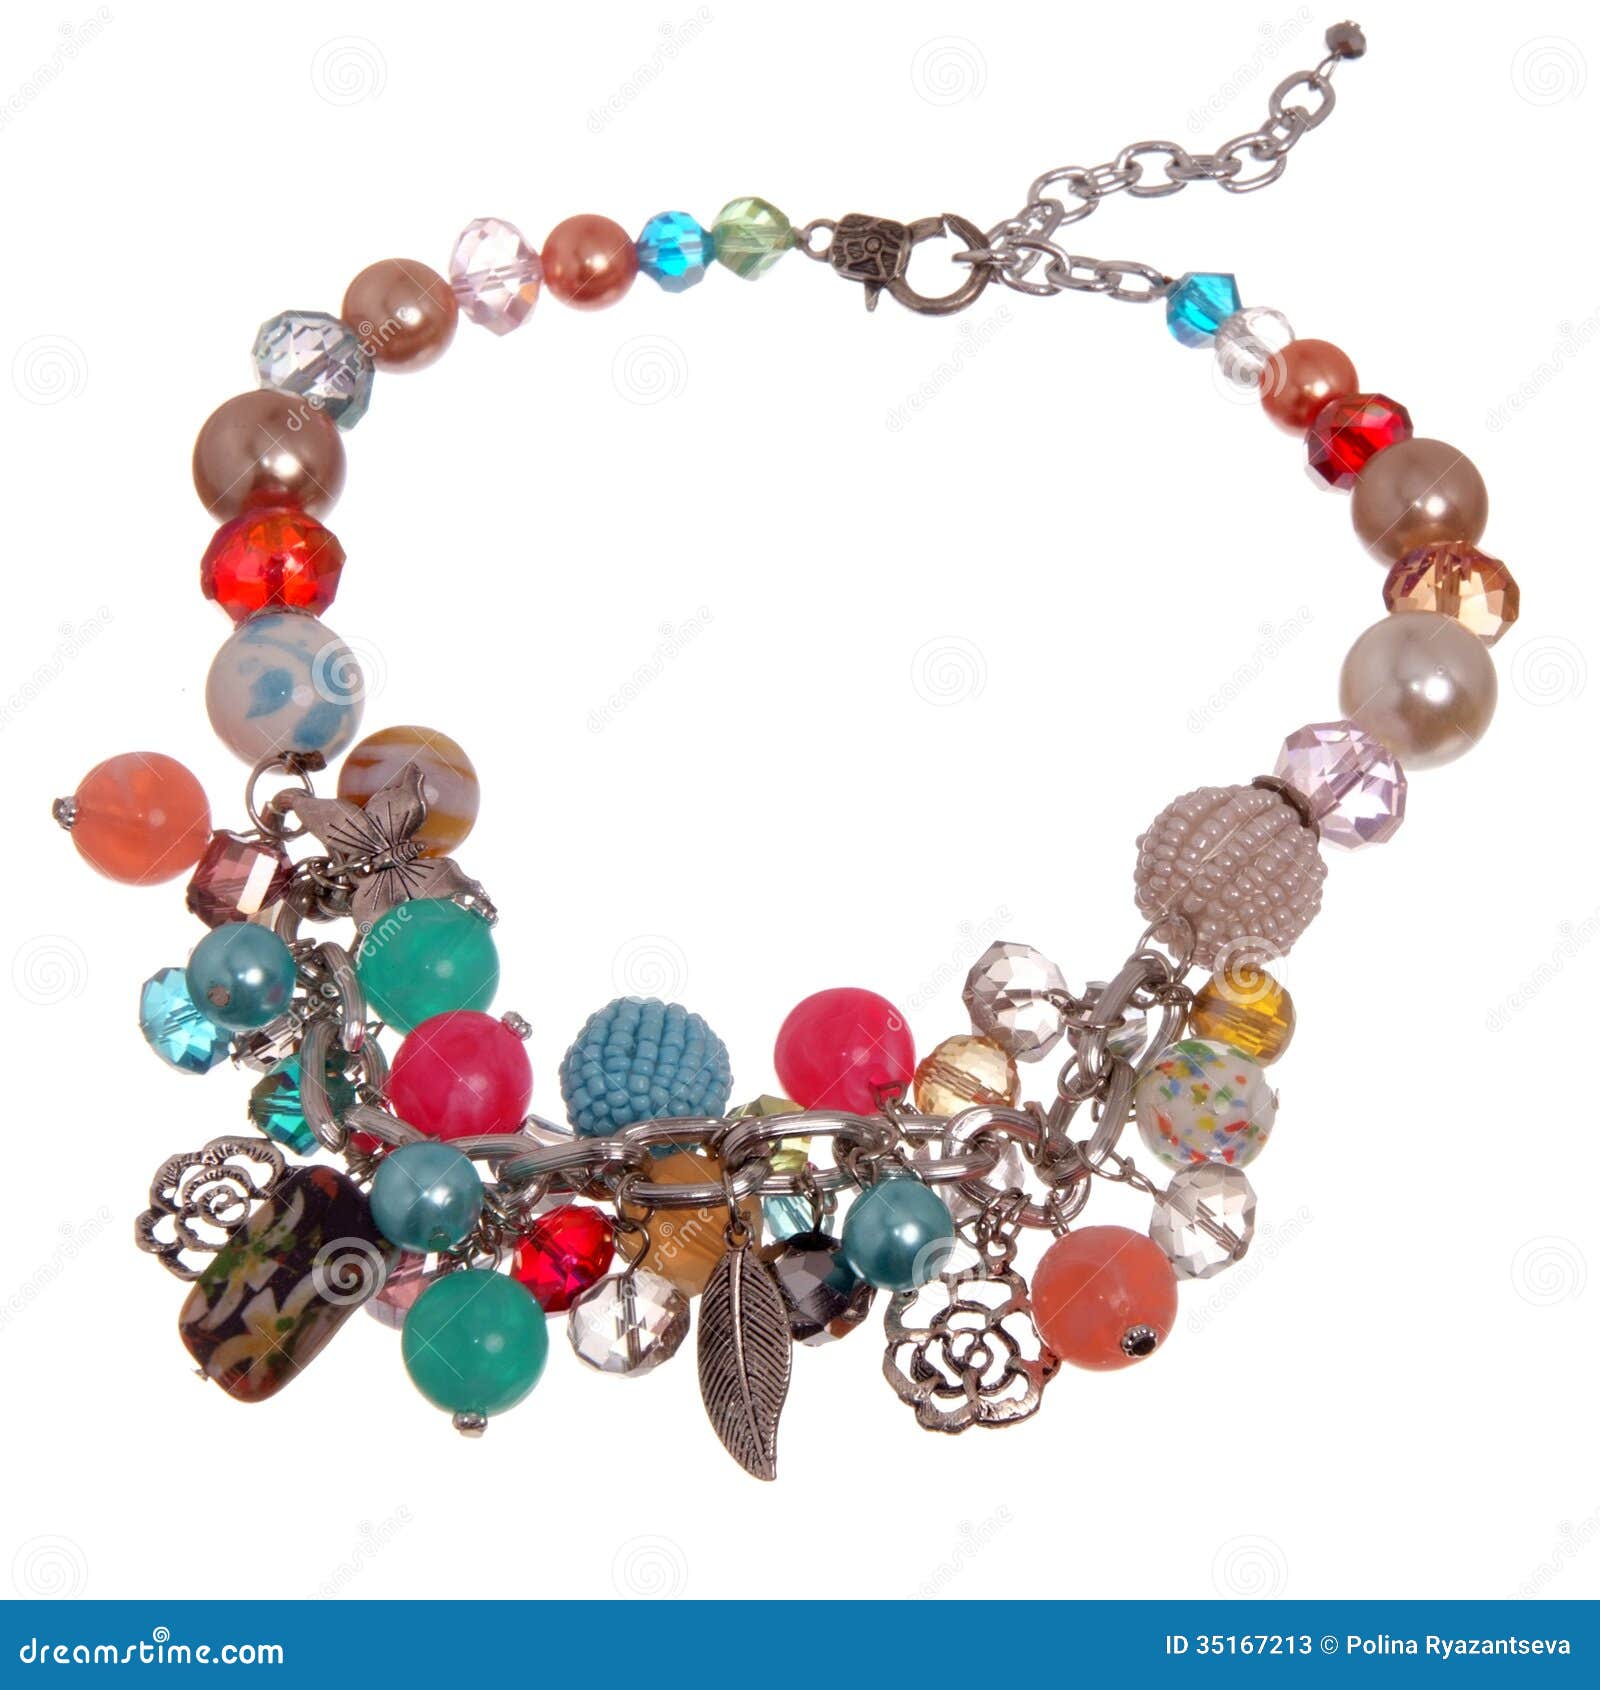 clip art beads jewelry - photo #10